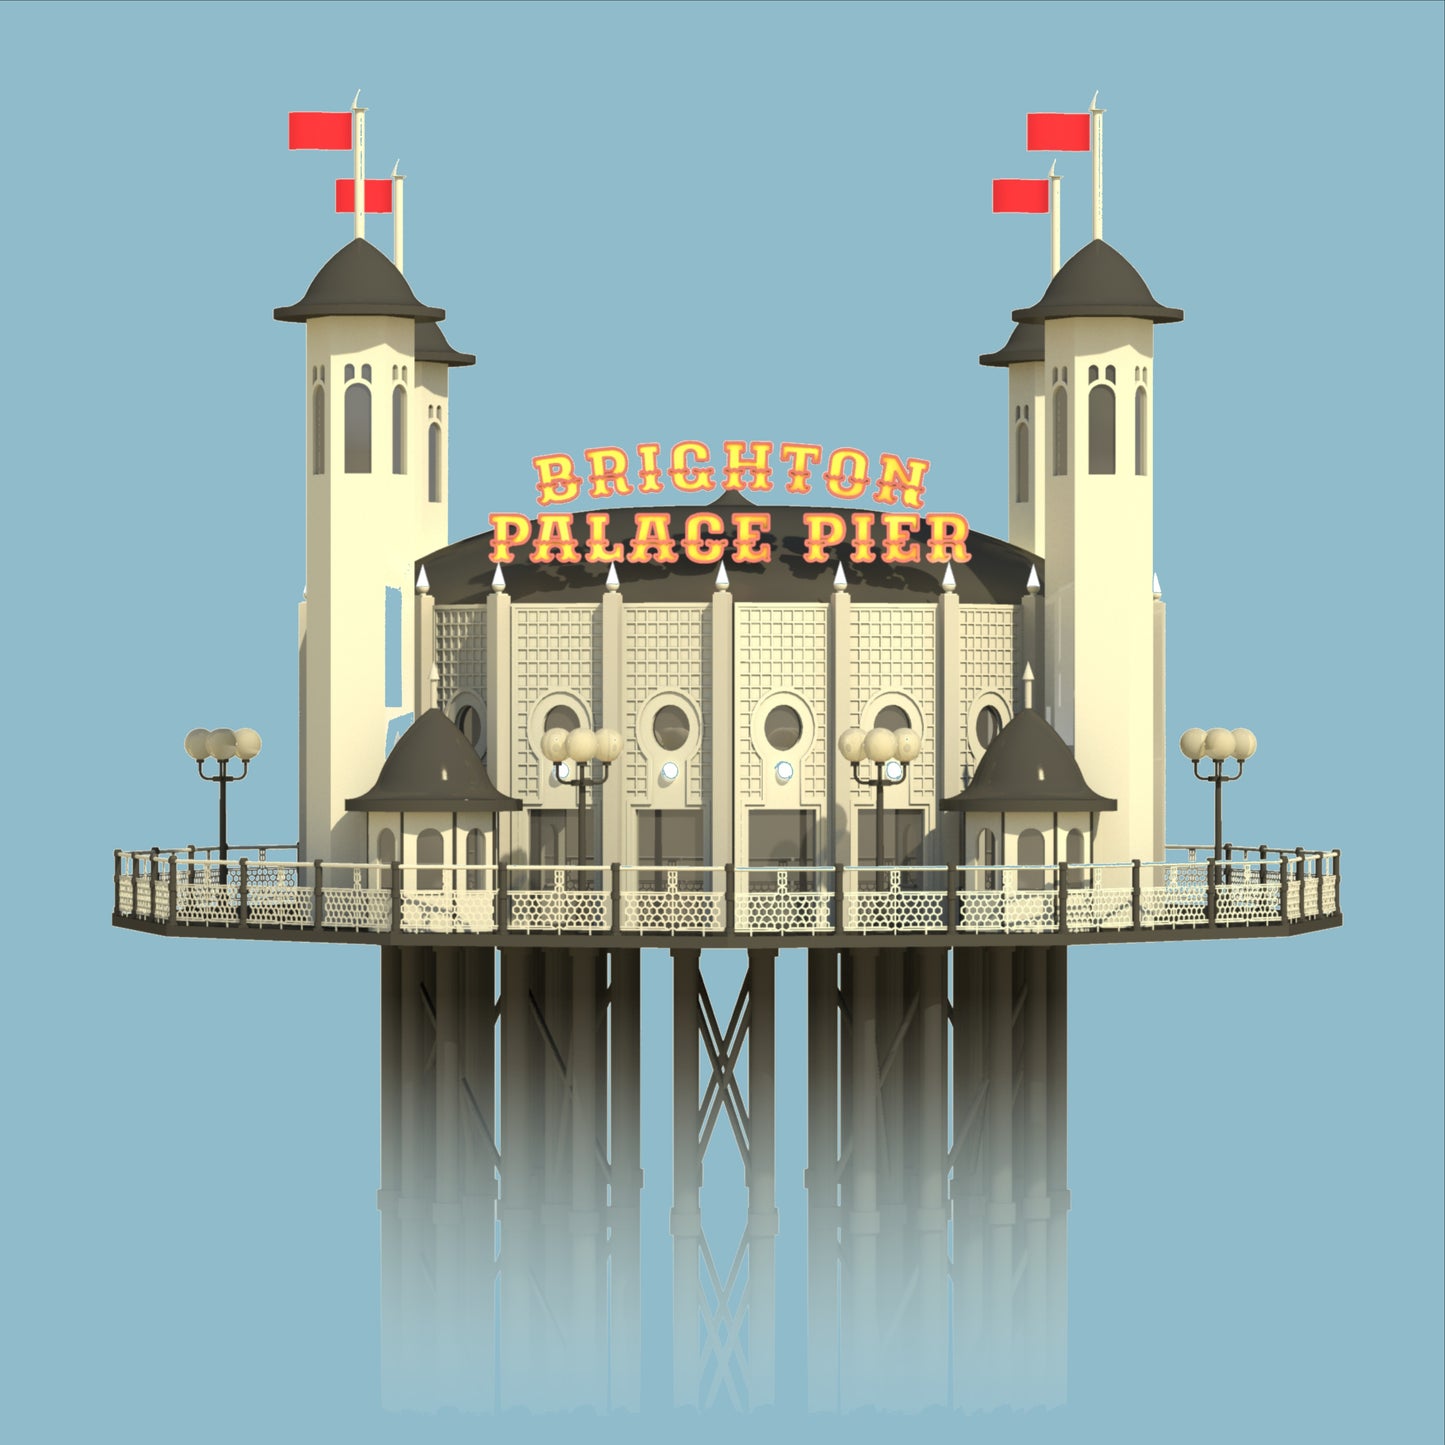 Palace Pier